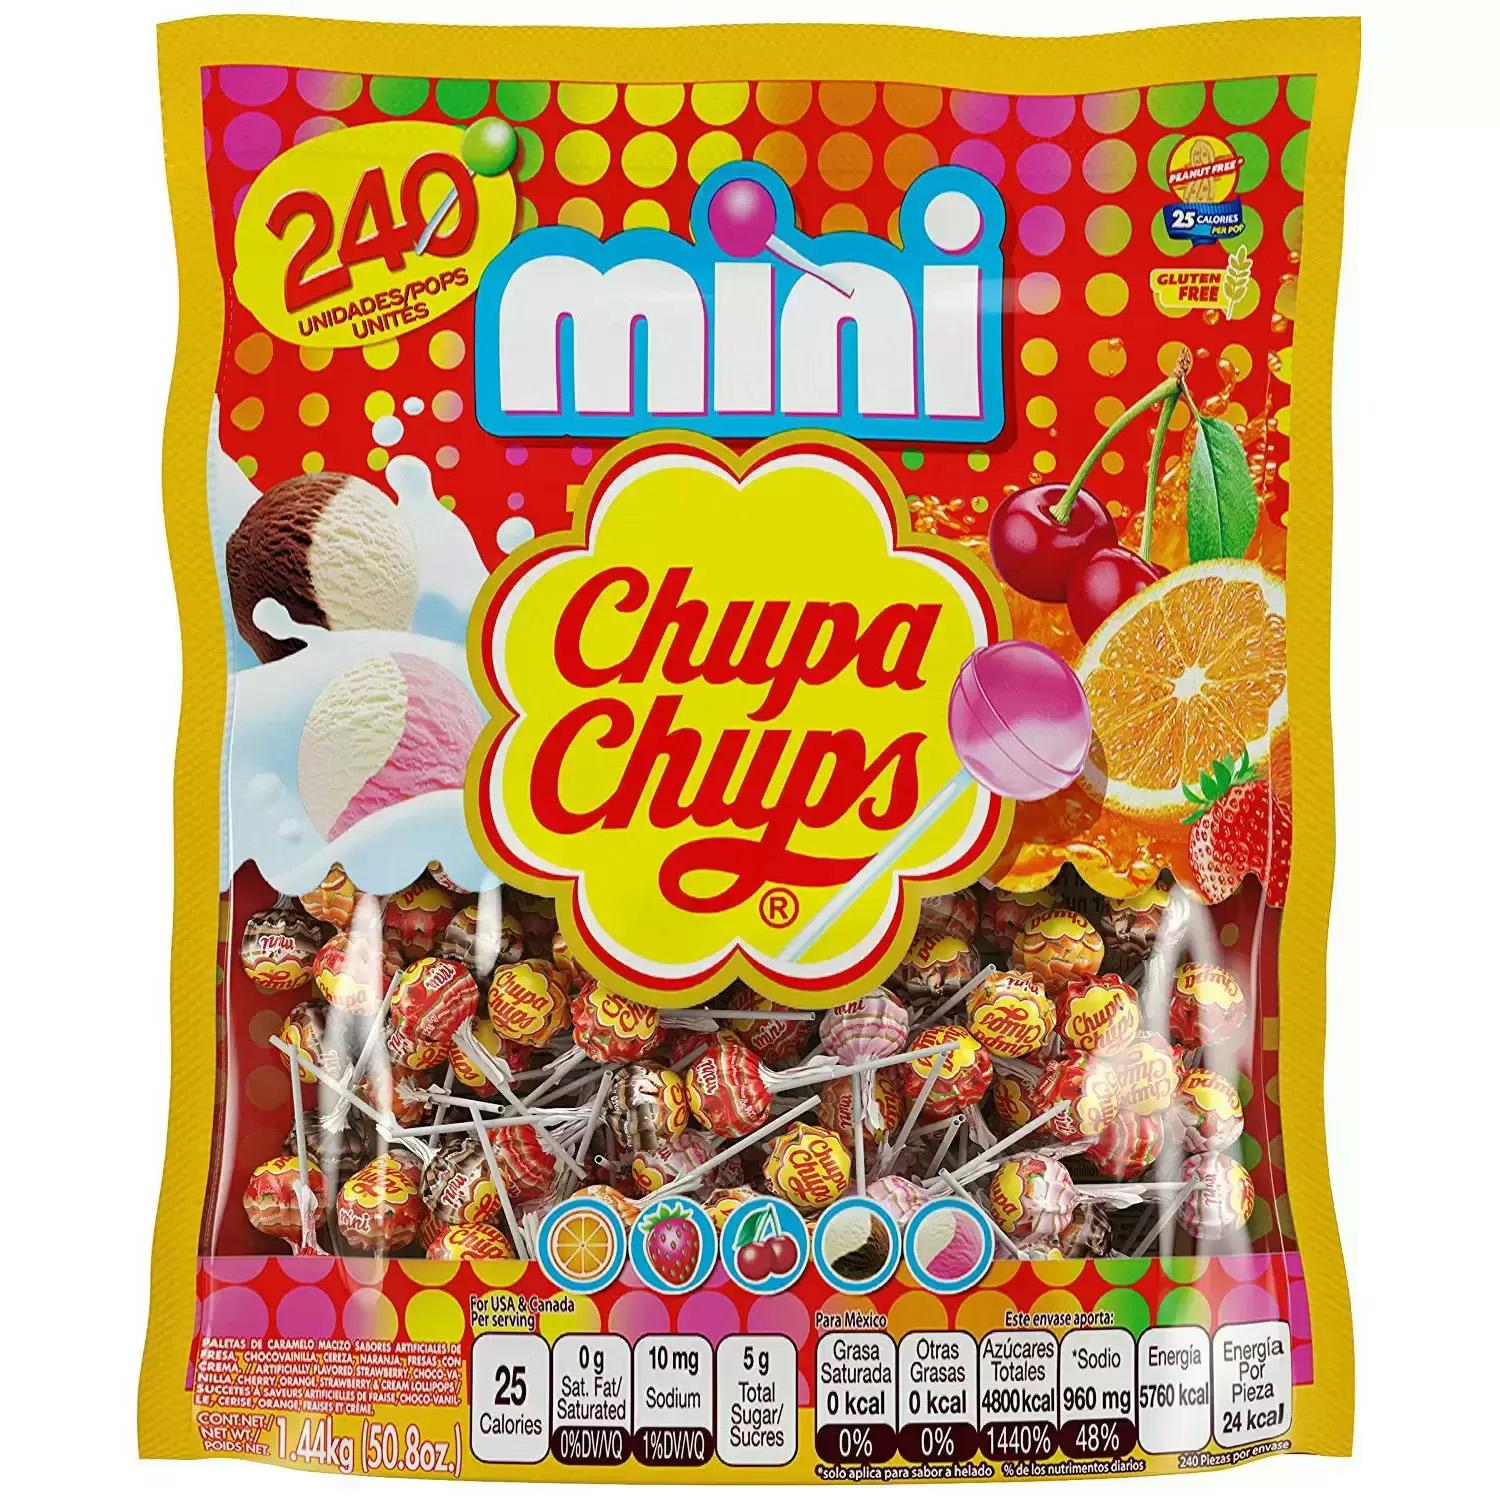 240 Chupa Chups Mini Lollipops for $5.99 Shipped